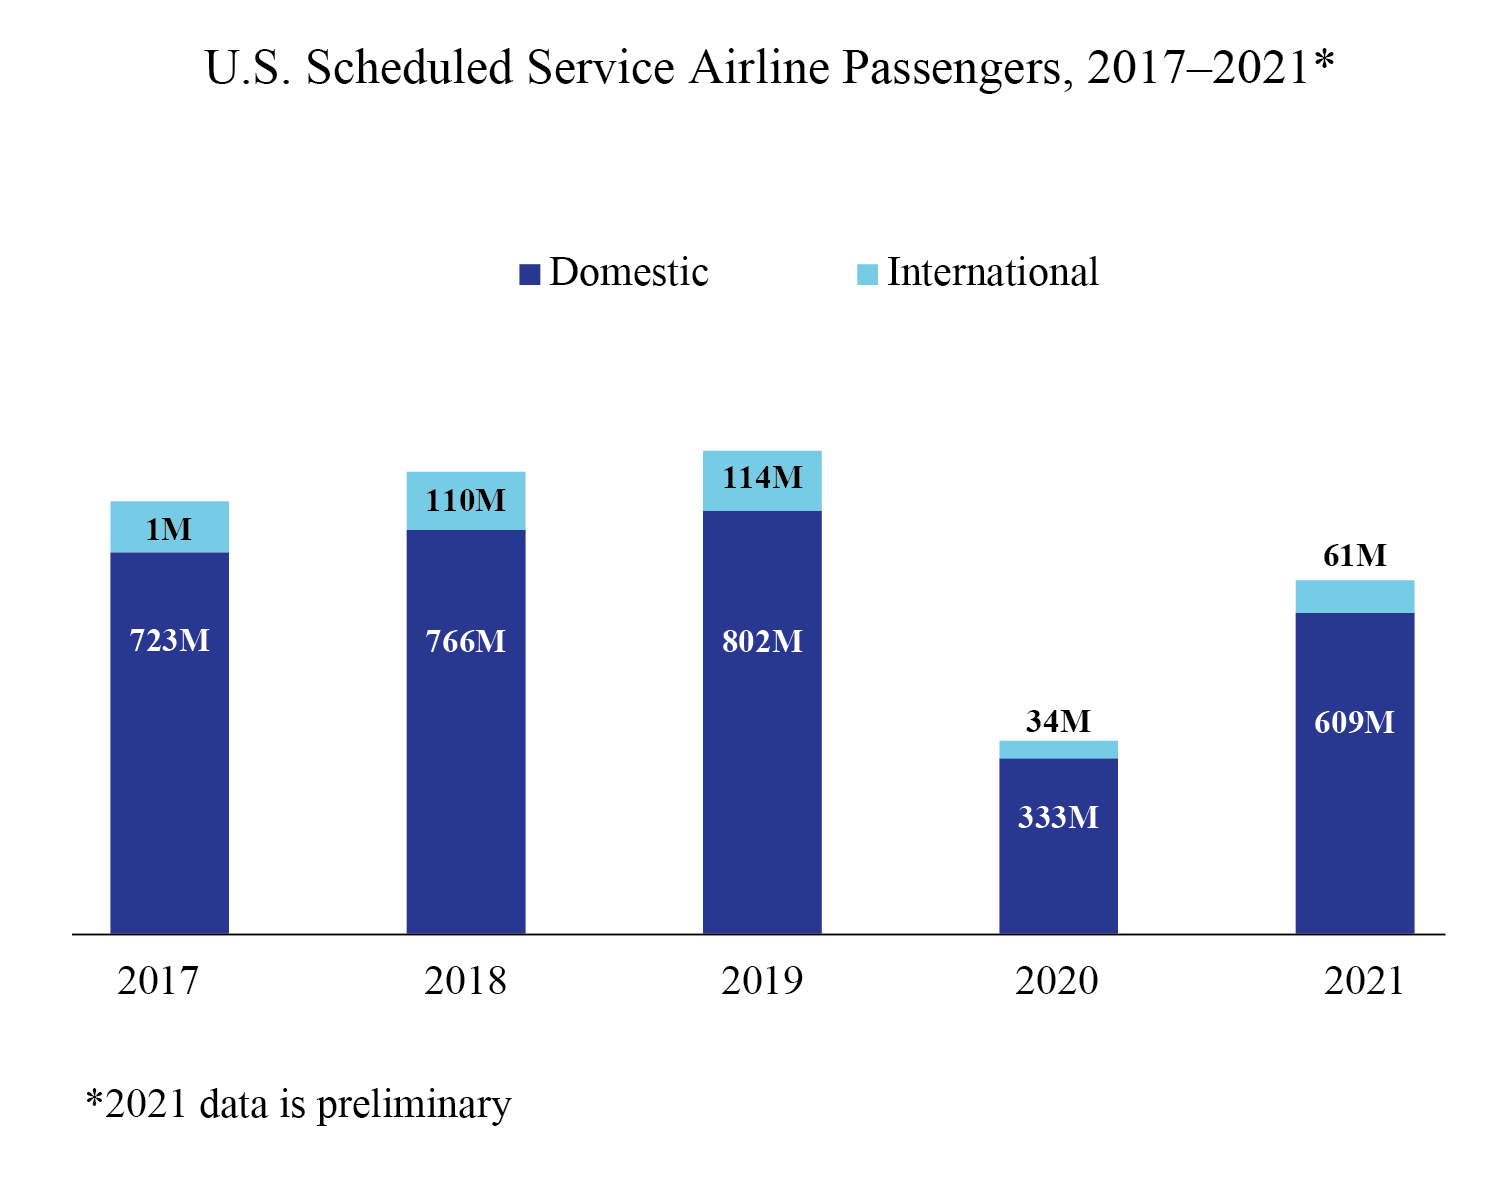 U.S. Scheduled Service Airline Passengers 2017-2021 (Bar chart)